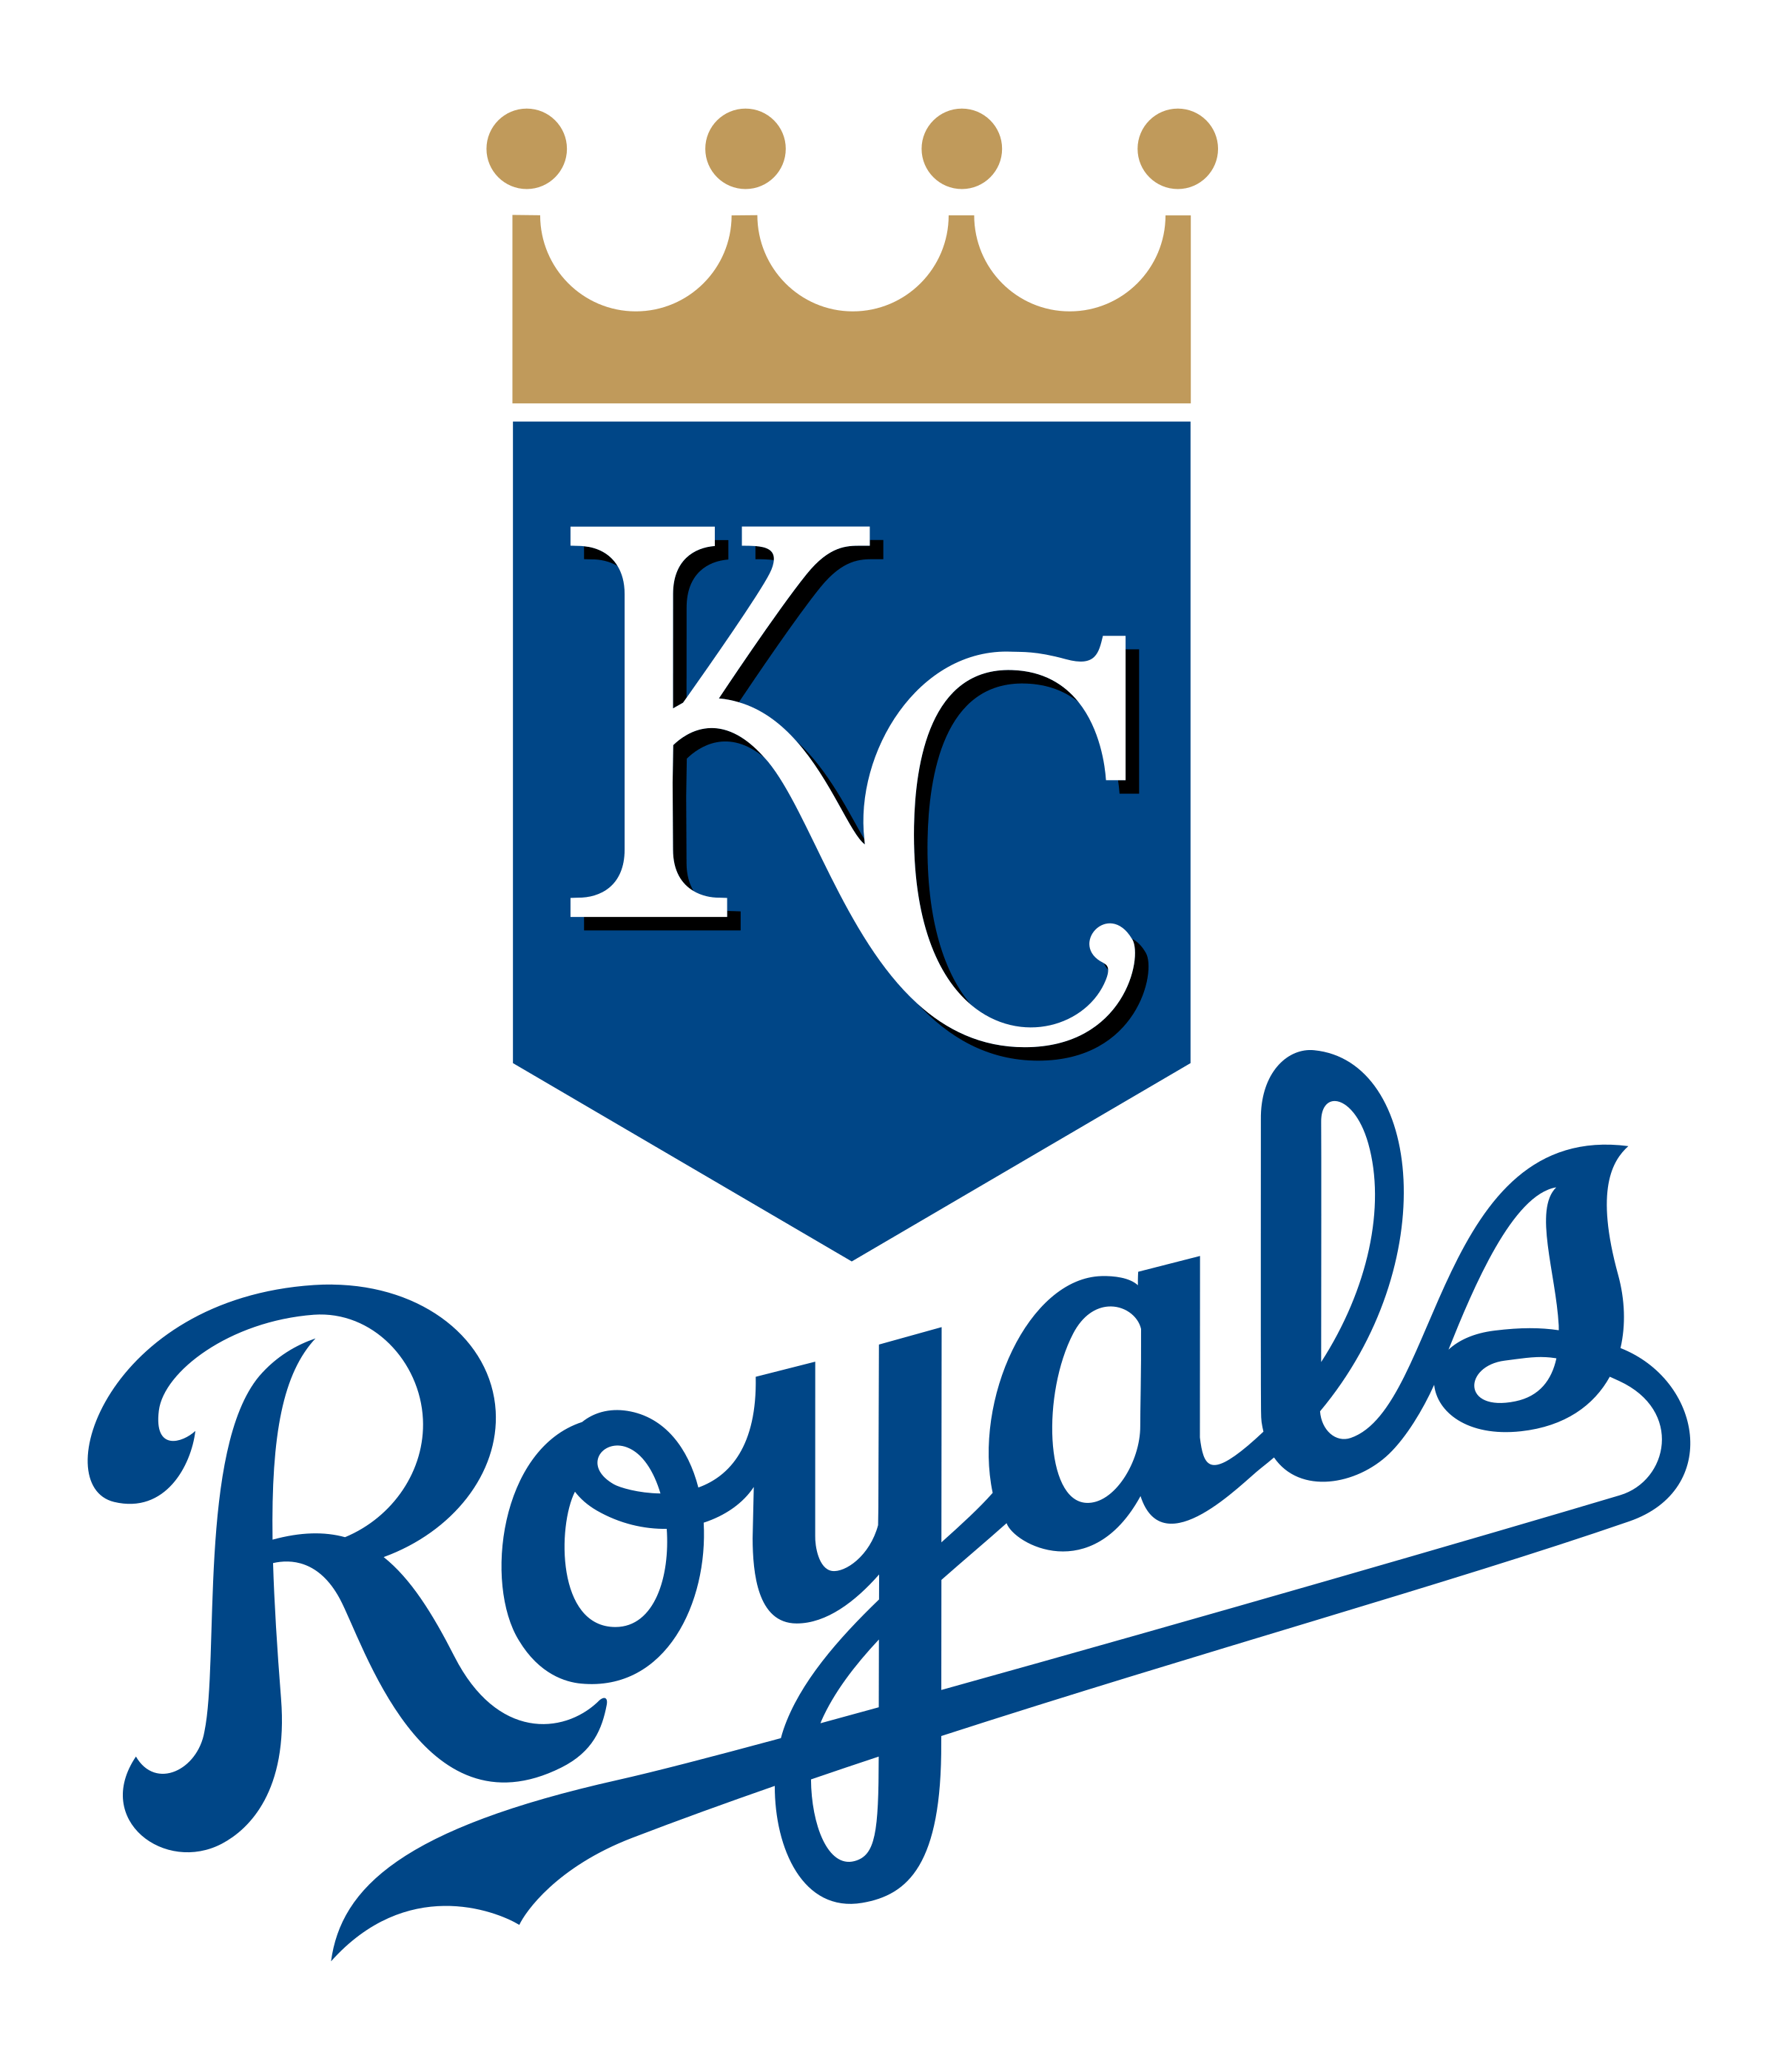 Transparent Royals Logo - Kansas City Royals Logo PNG Transparent & SVG Vector - Freebie Supply